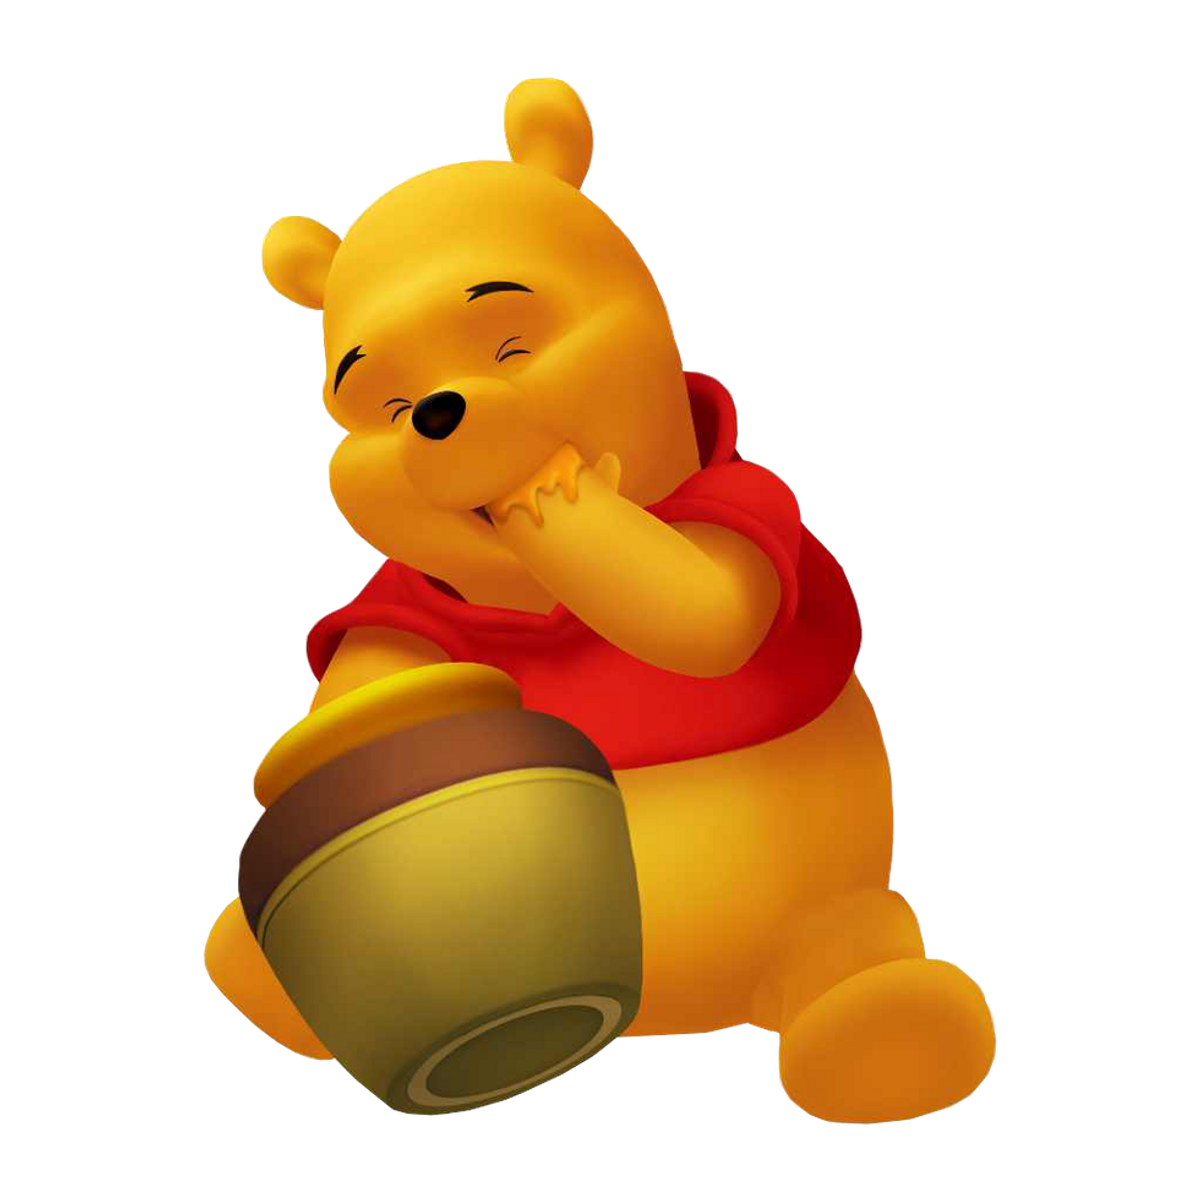 My "Pooh Bear"